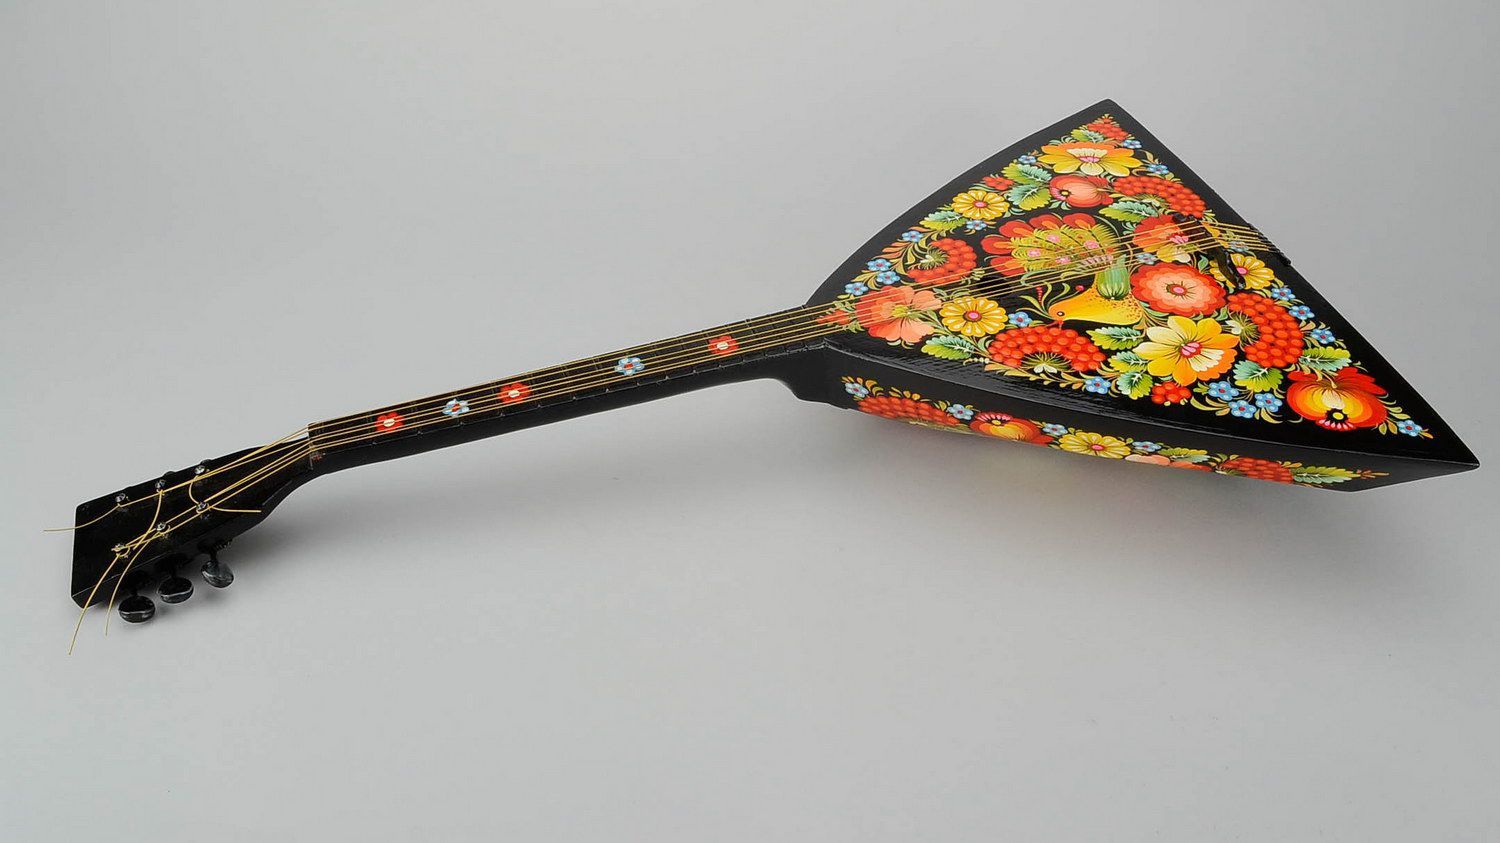 Балалайка фото музыкальный инструмент балалайка